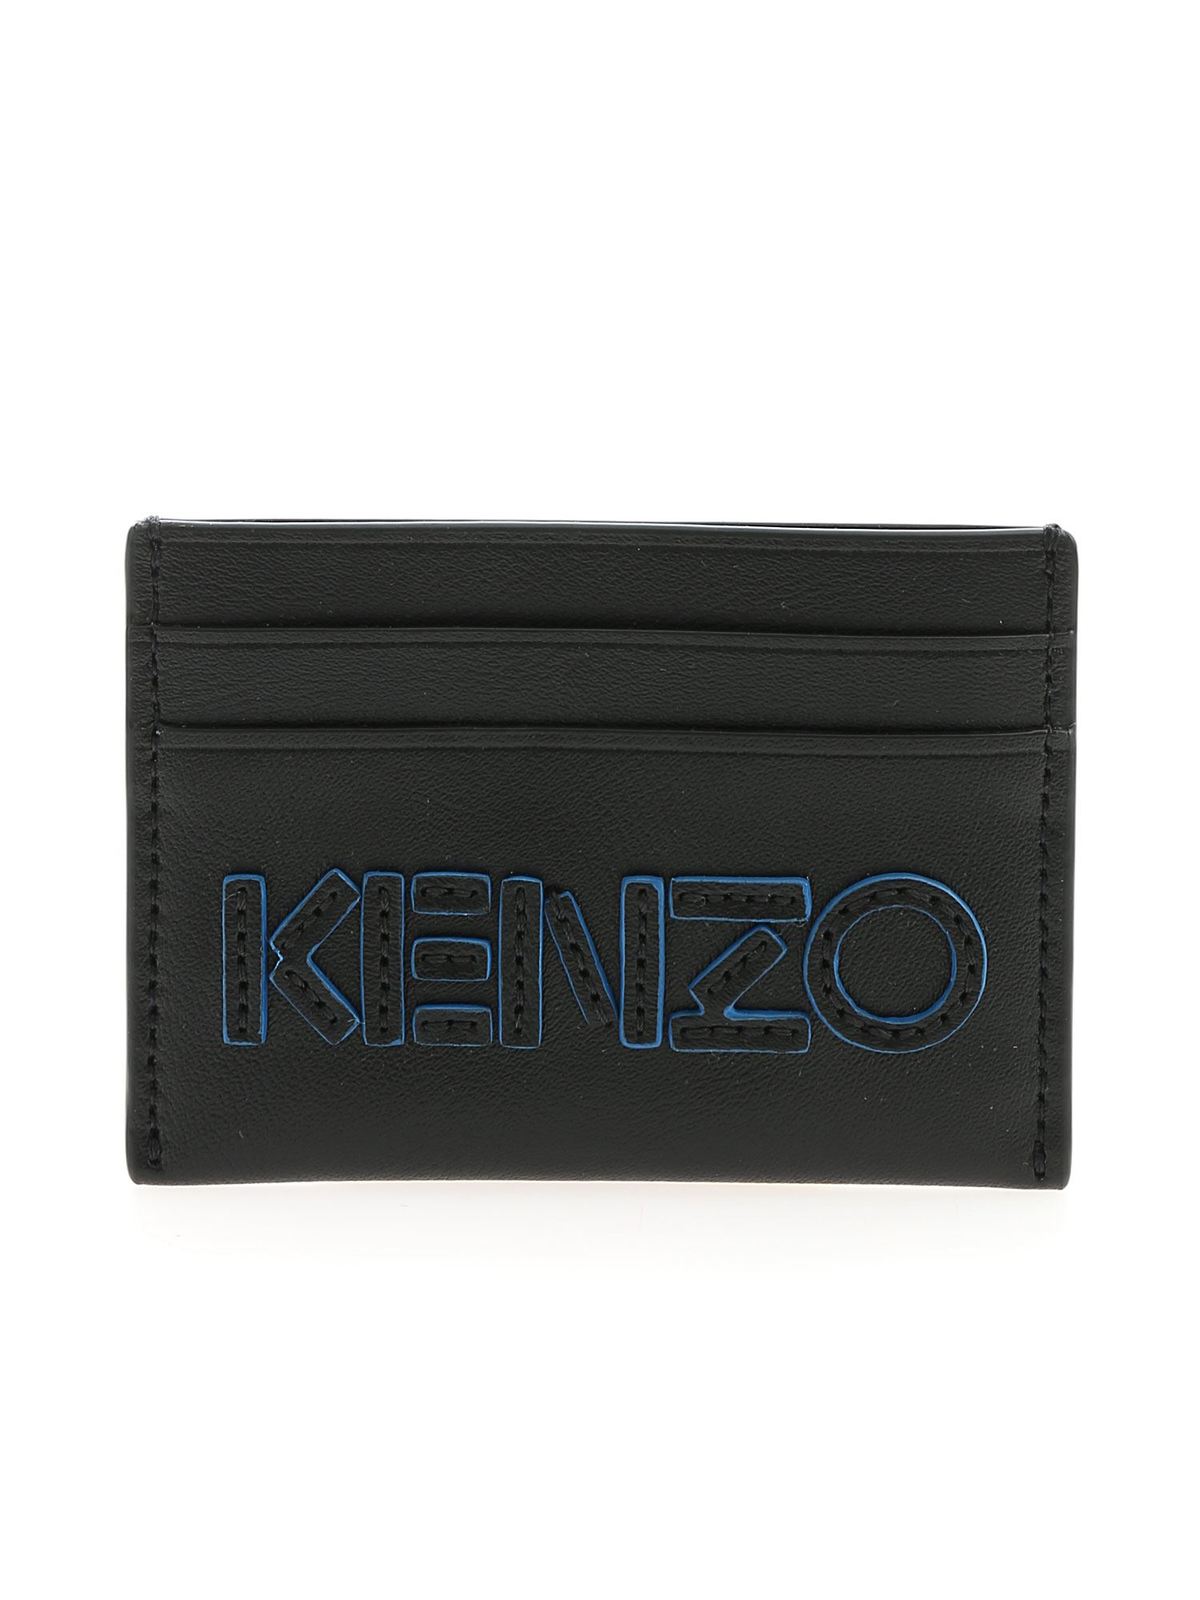 kenzo card holder